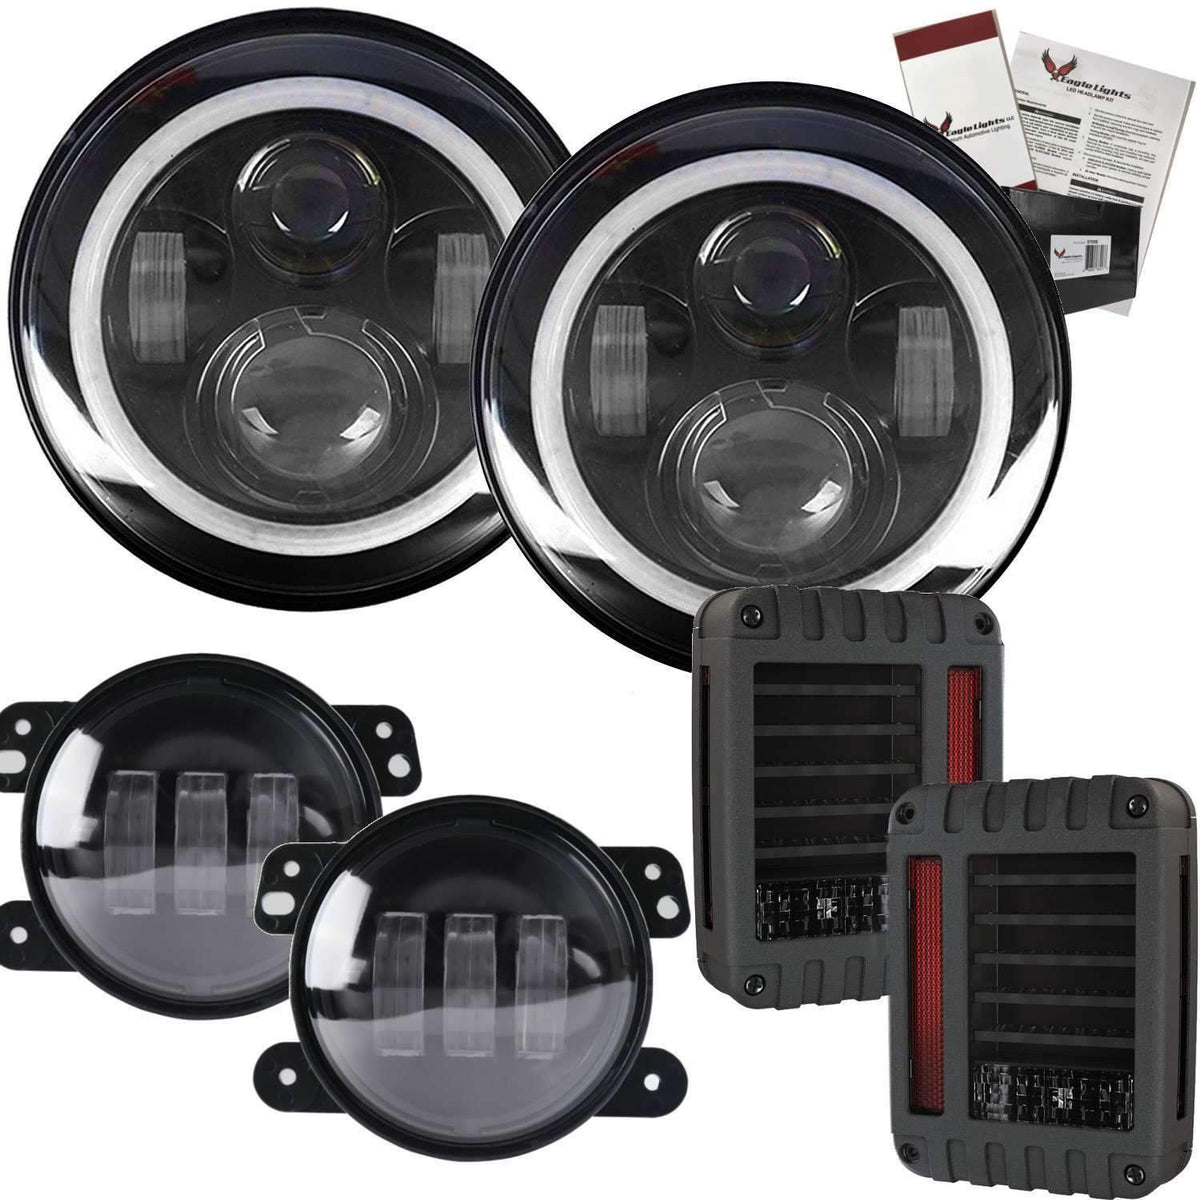 7” Halo LED Headlight Kits - Eagle Lights 7" LED Headlight Kit For Jeeps With White LED Halo Rings - Double Pack*